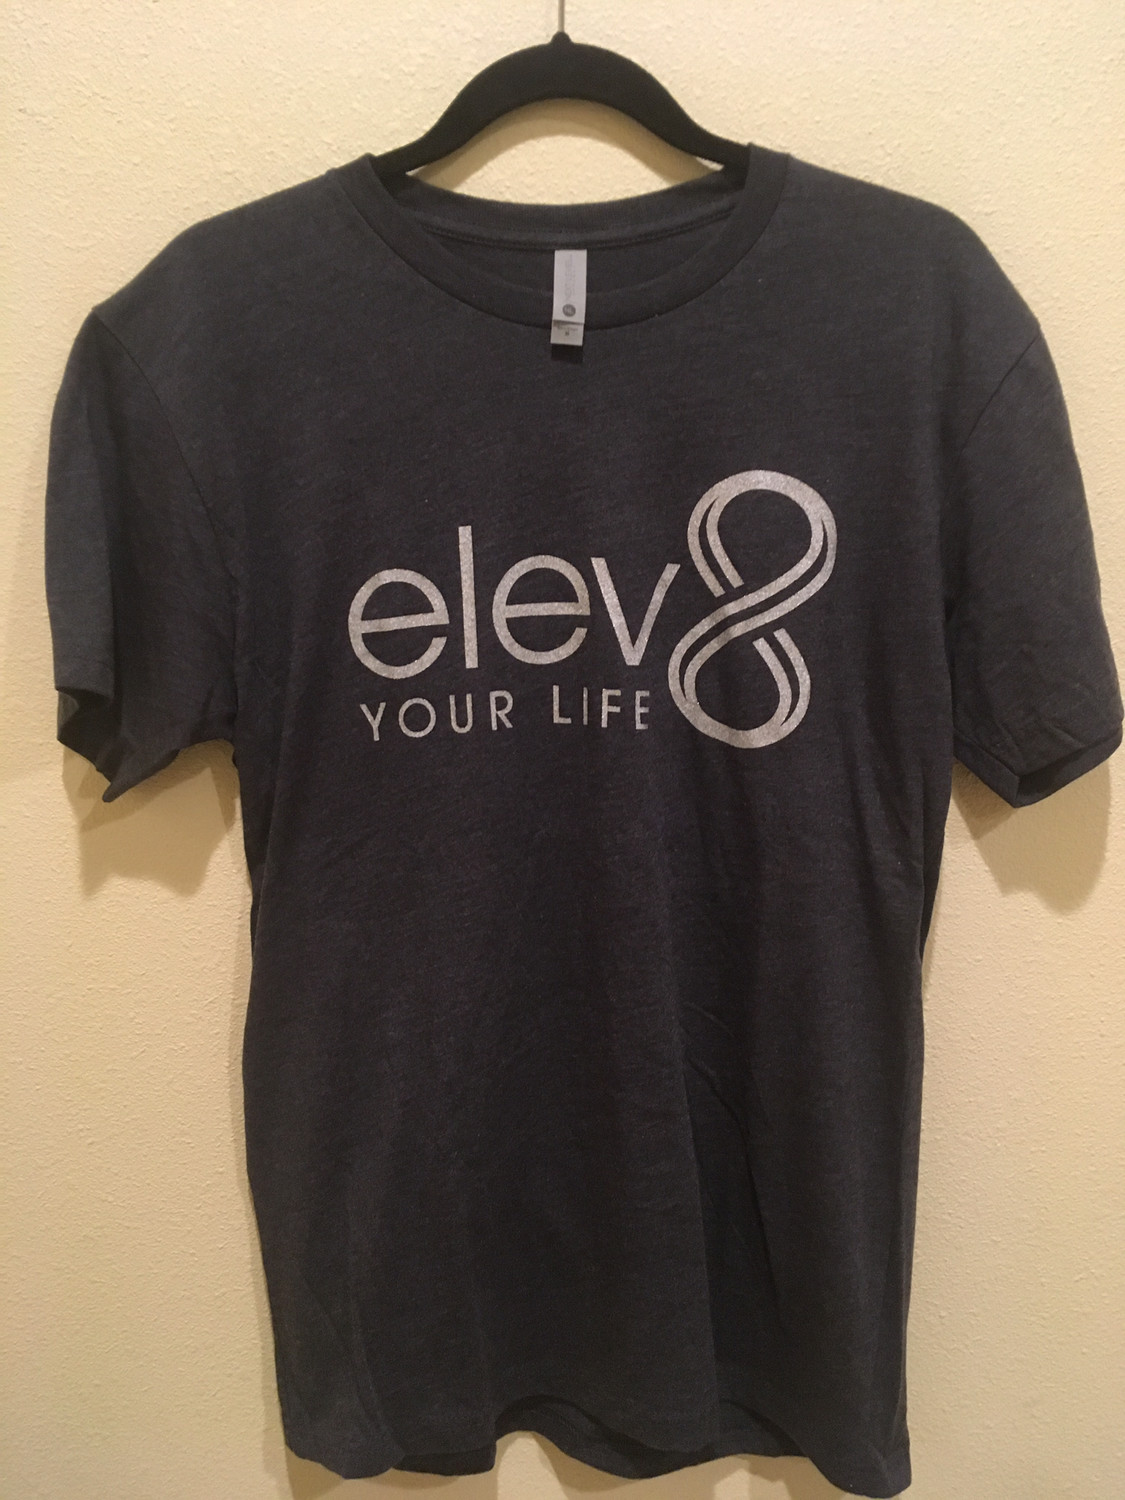 Elev8 Your Life T-Shirt - Men's